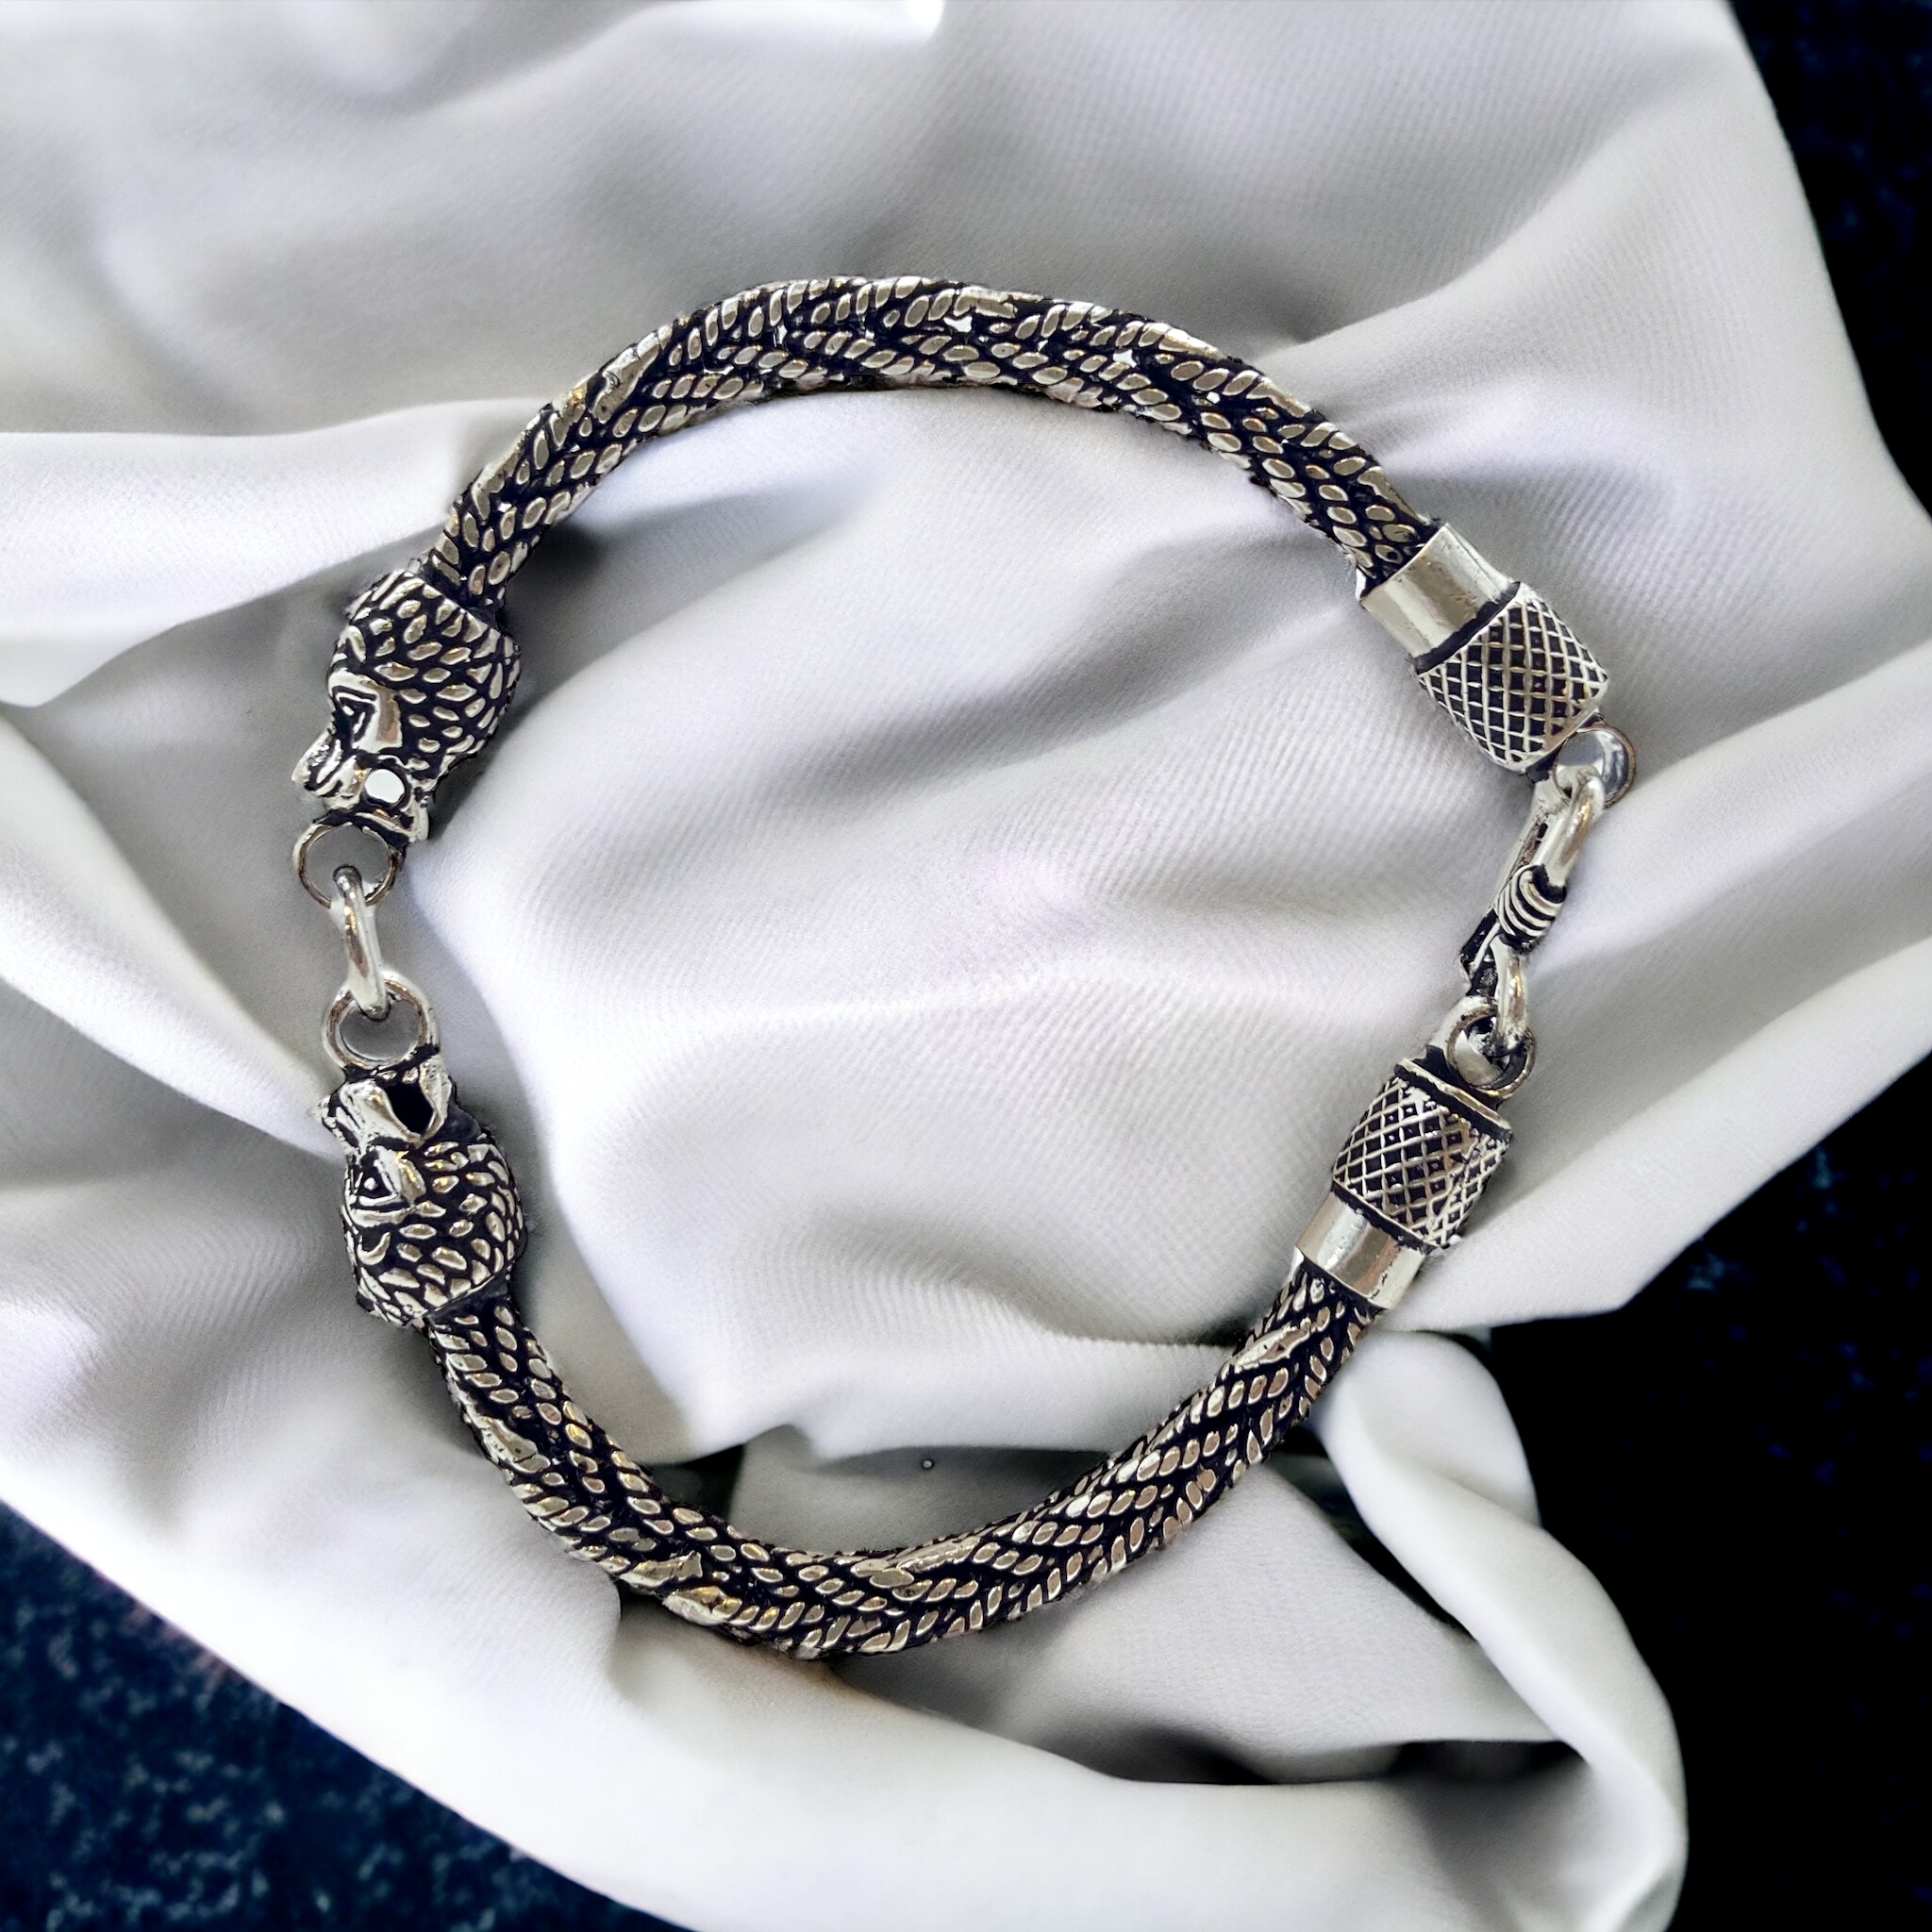 Lion Silver Men's Bracelet | 925 Certified Silver Bracelet For Men's